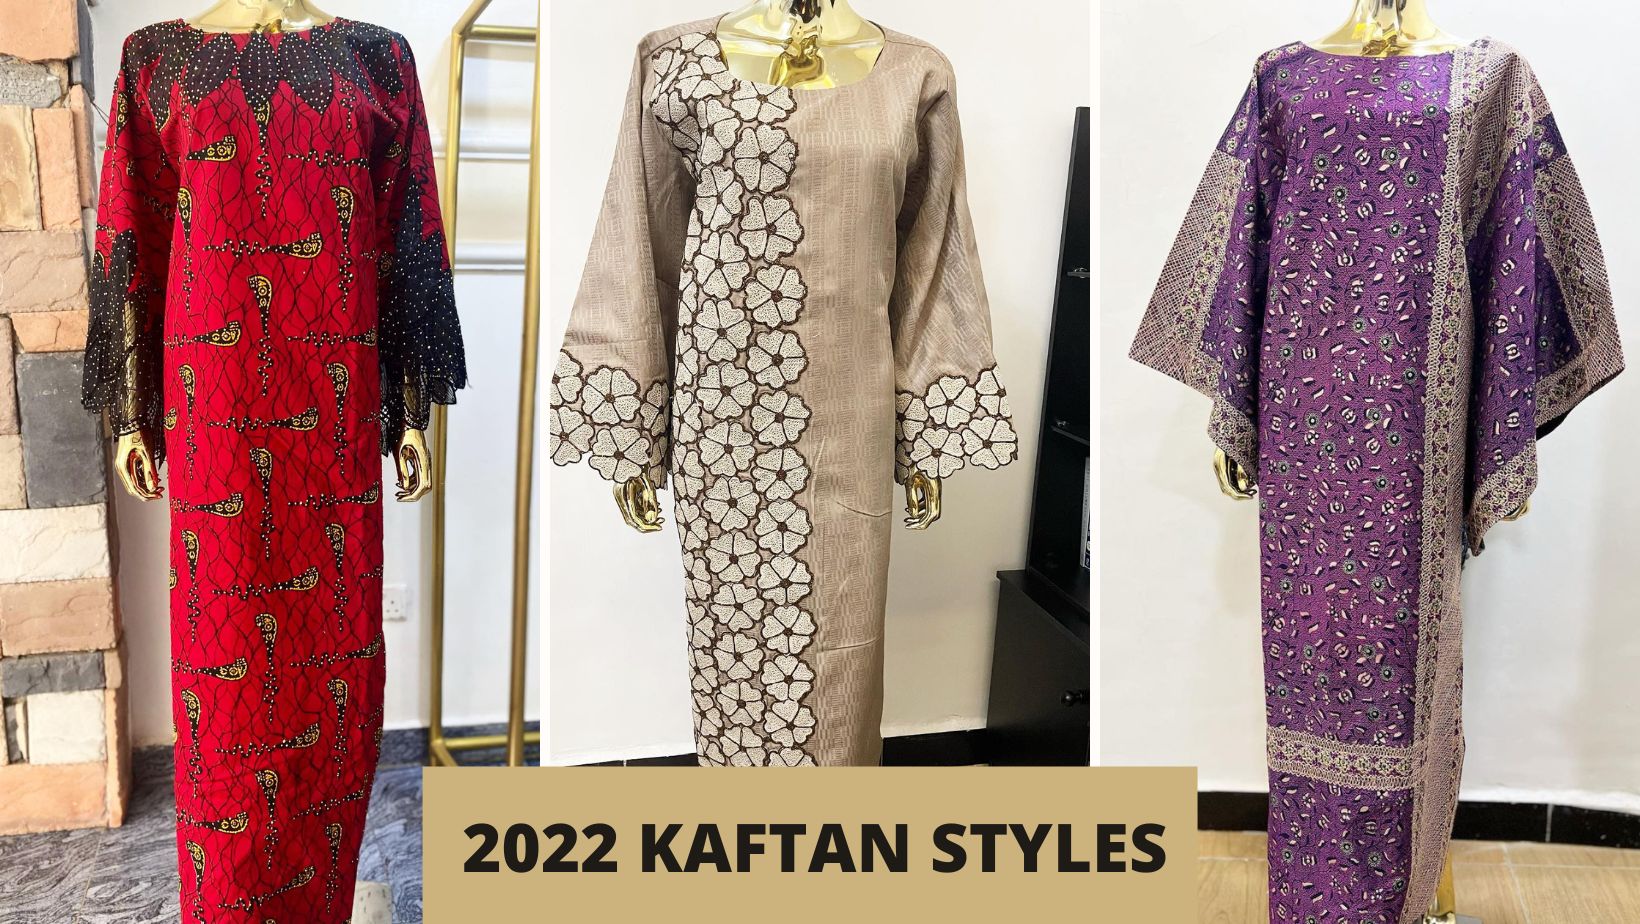 Kaftan styles